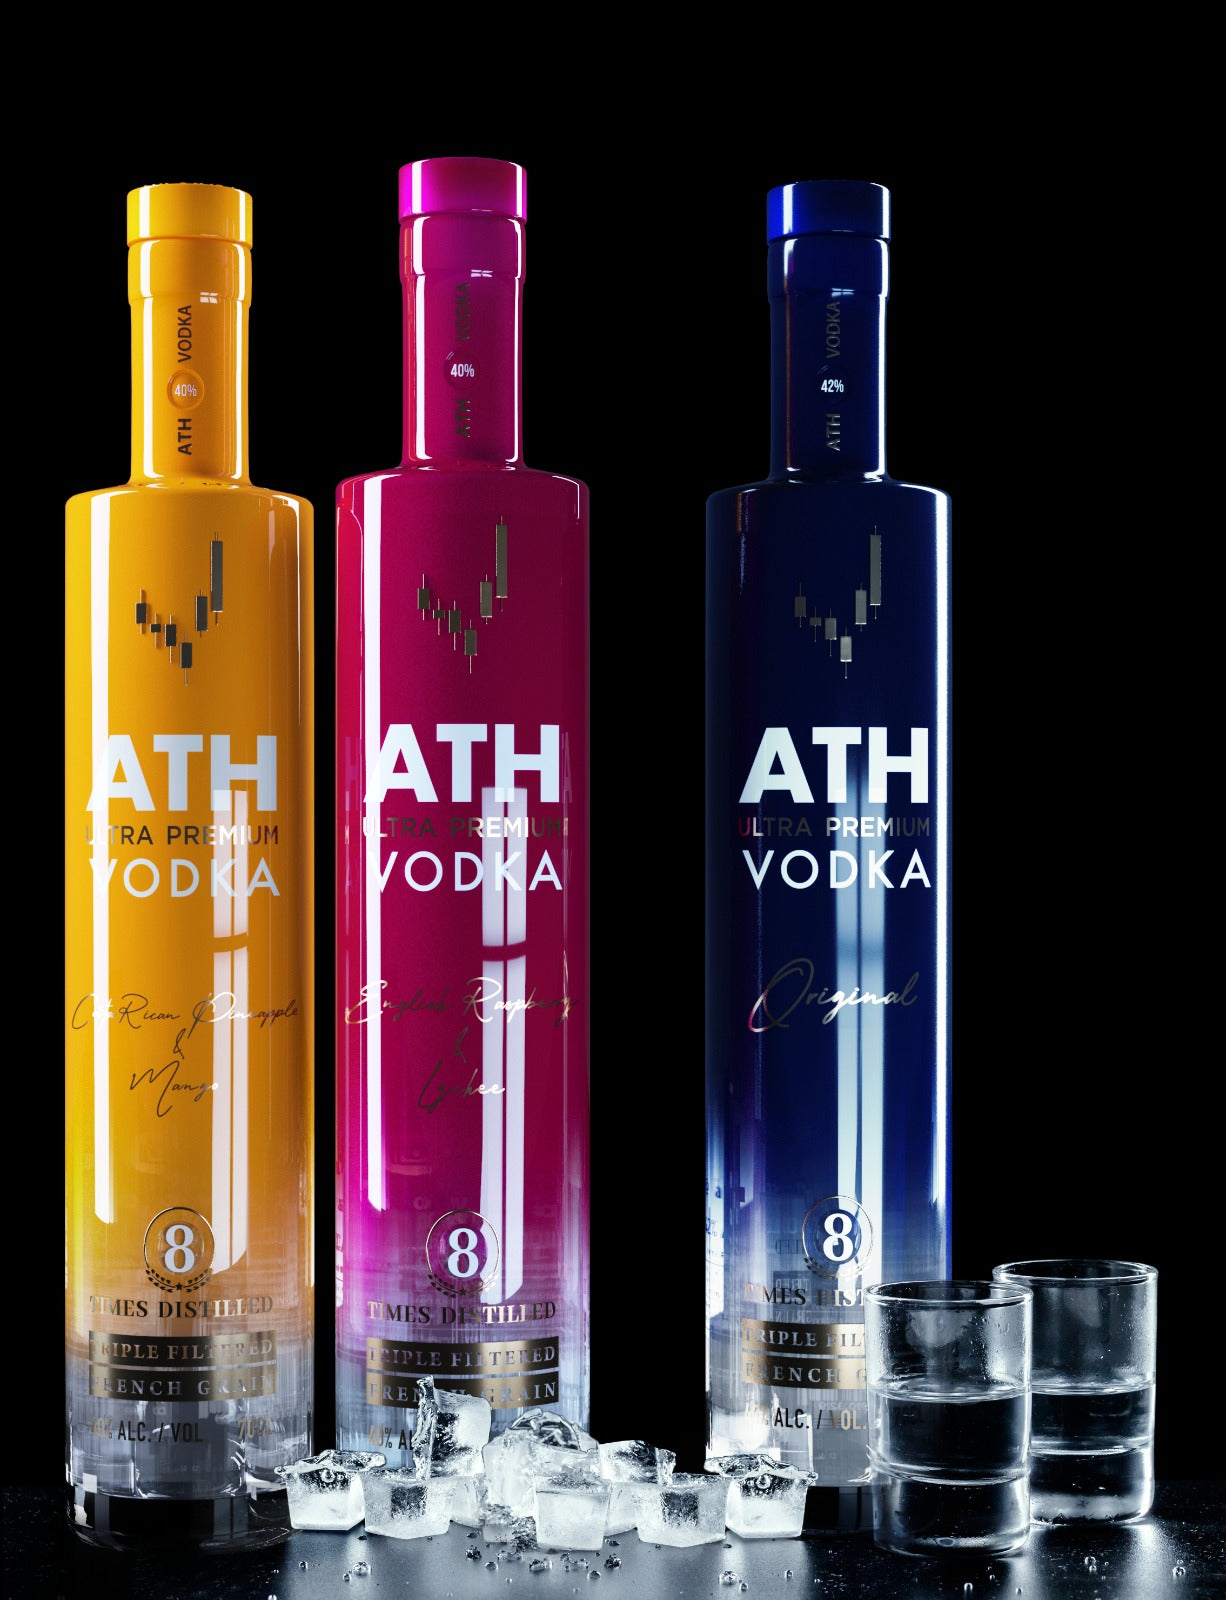 Partnership with ATH Vodka